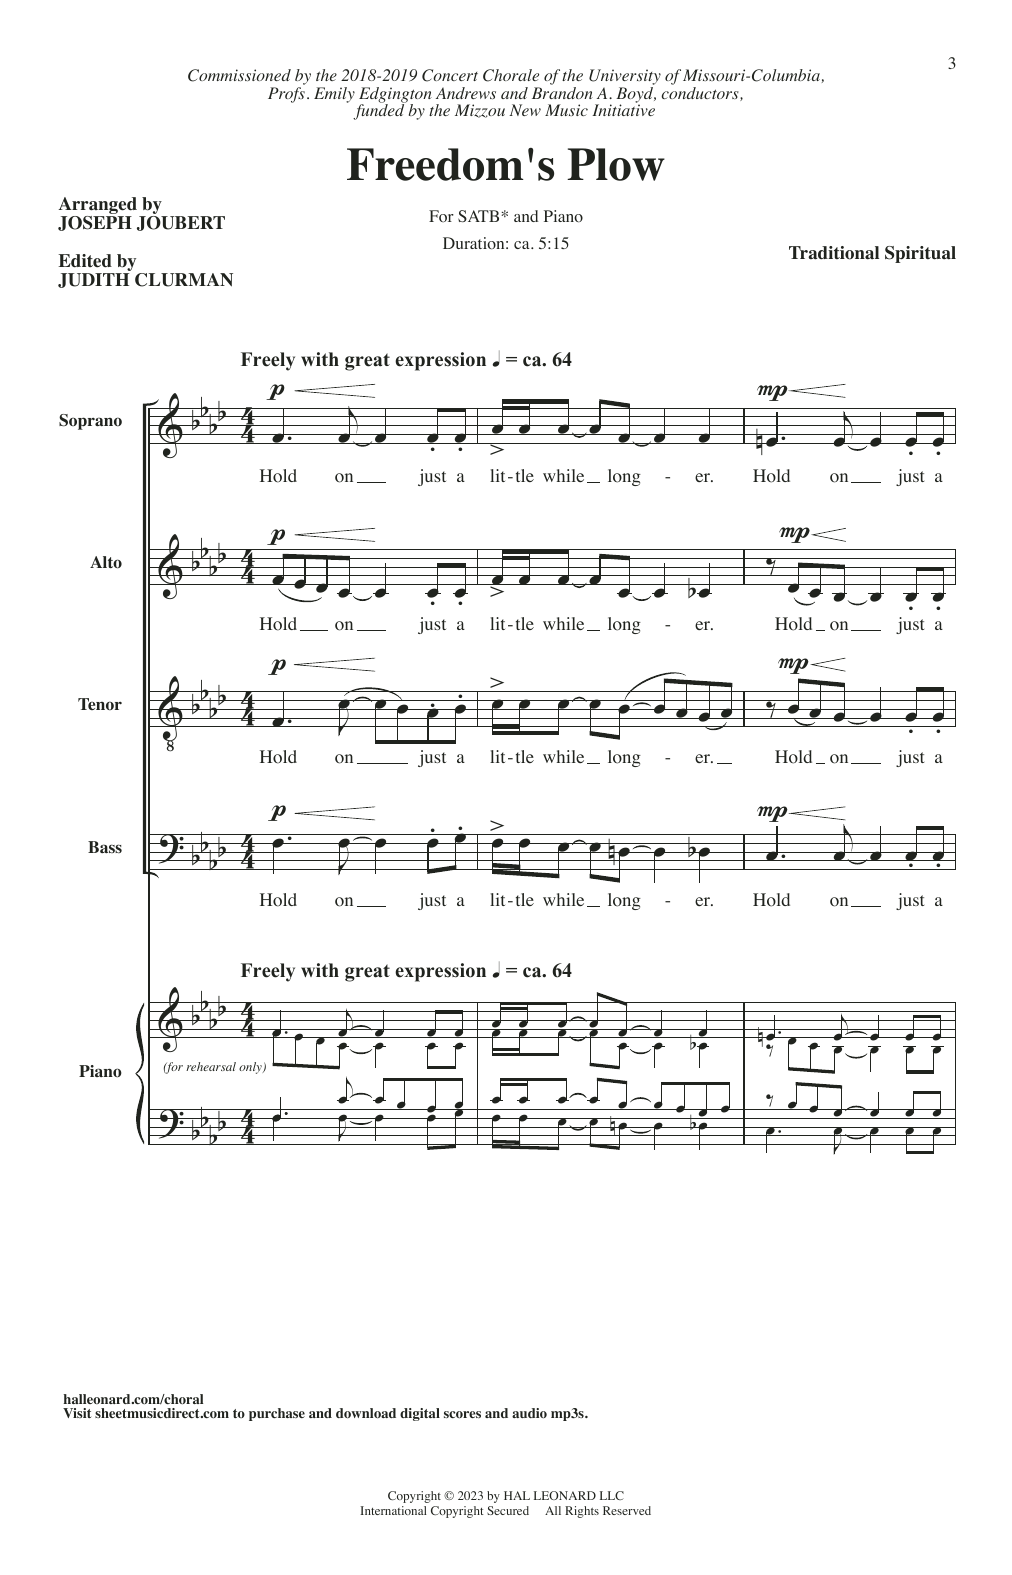 Traditional Spiritual Freedom's Plow (arr. Joseph Joubert) Sheet Music Notes & Chords for SATB Choir - Download or Print PDF